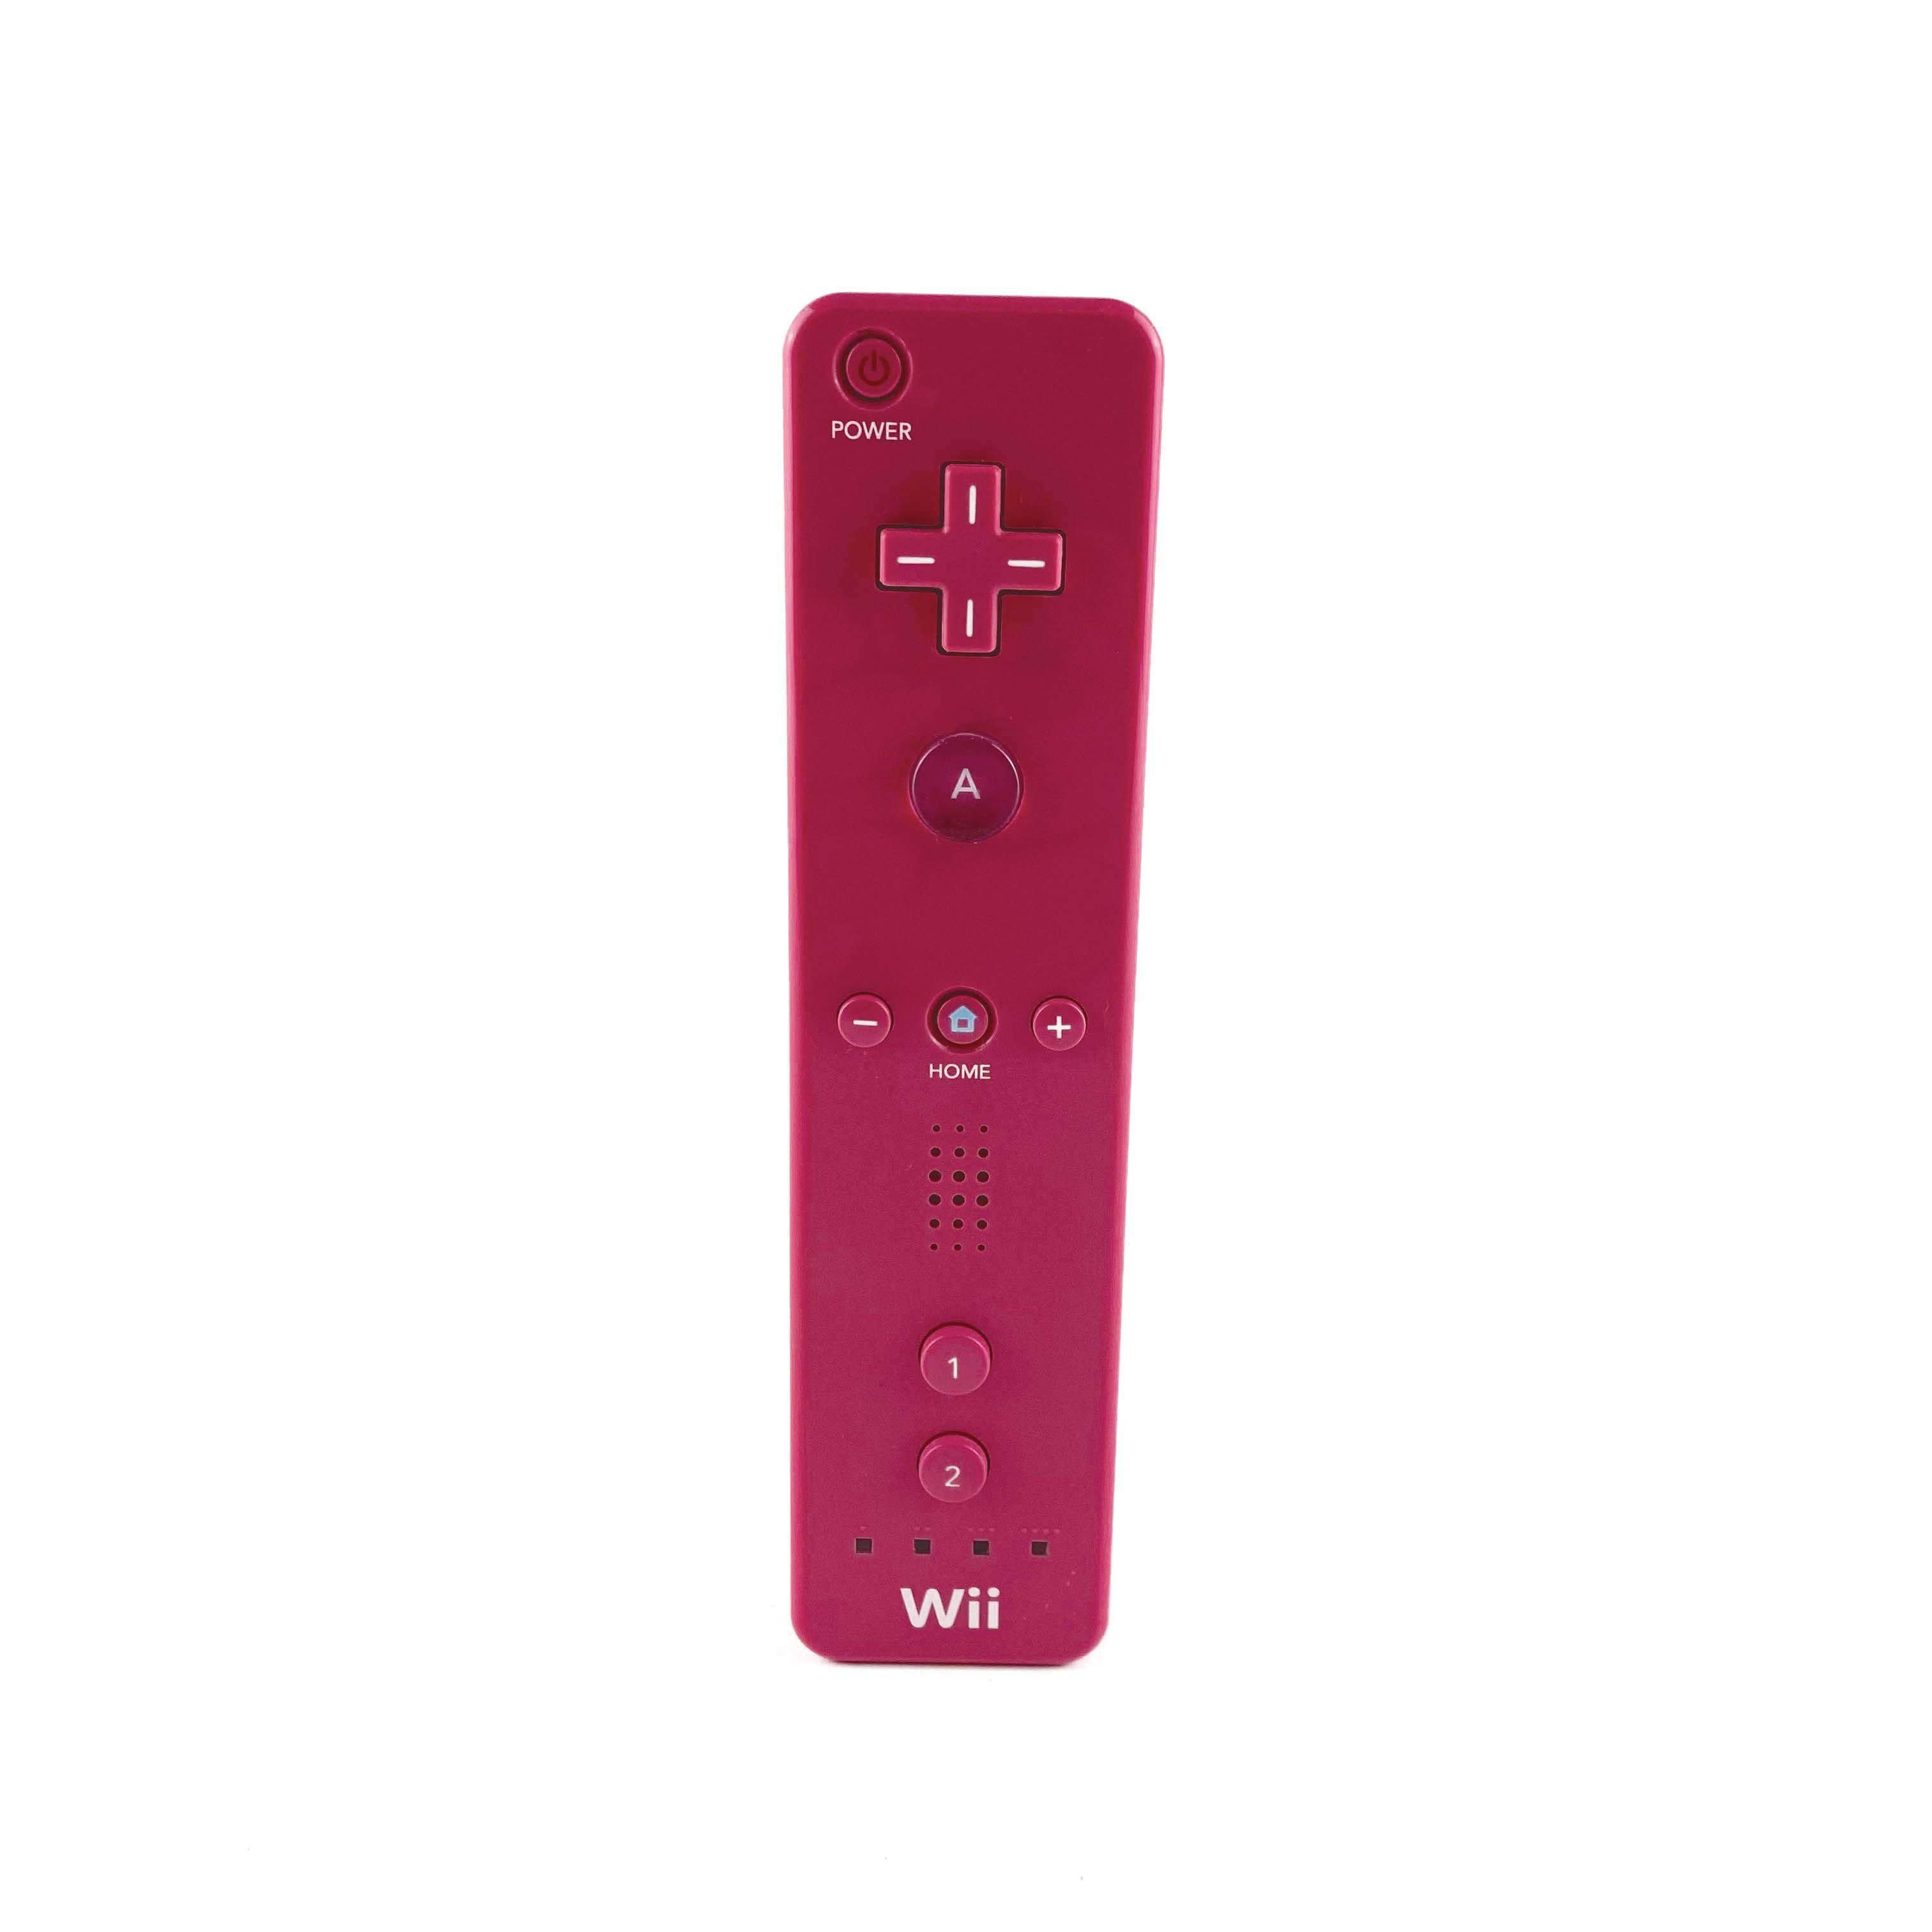 Nintendo Wii Remote Controller Pink (RVL-003)